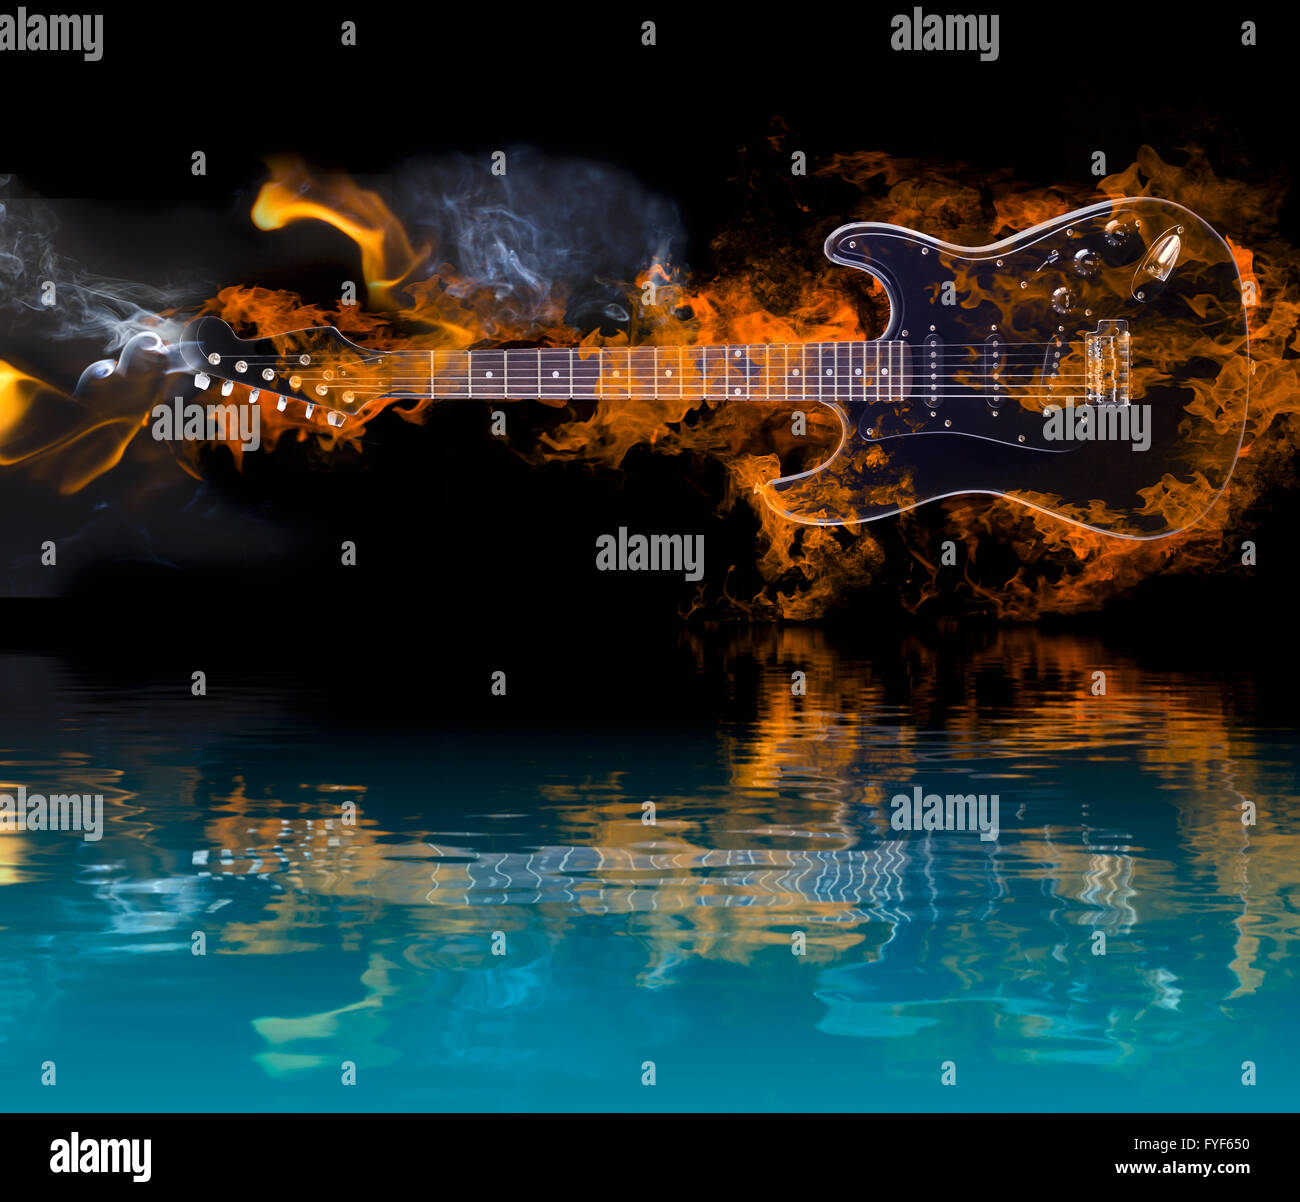 Burning electric guitar fotografías e imágenes de alta resolución - Alamy